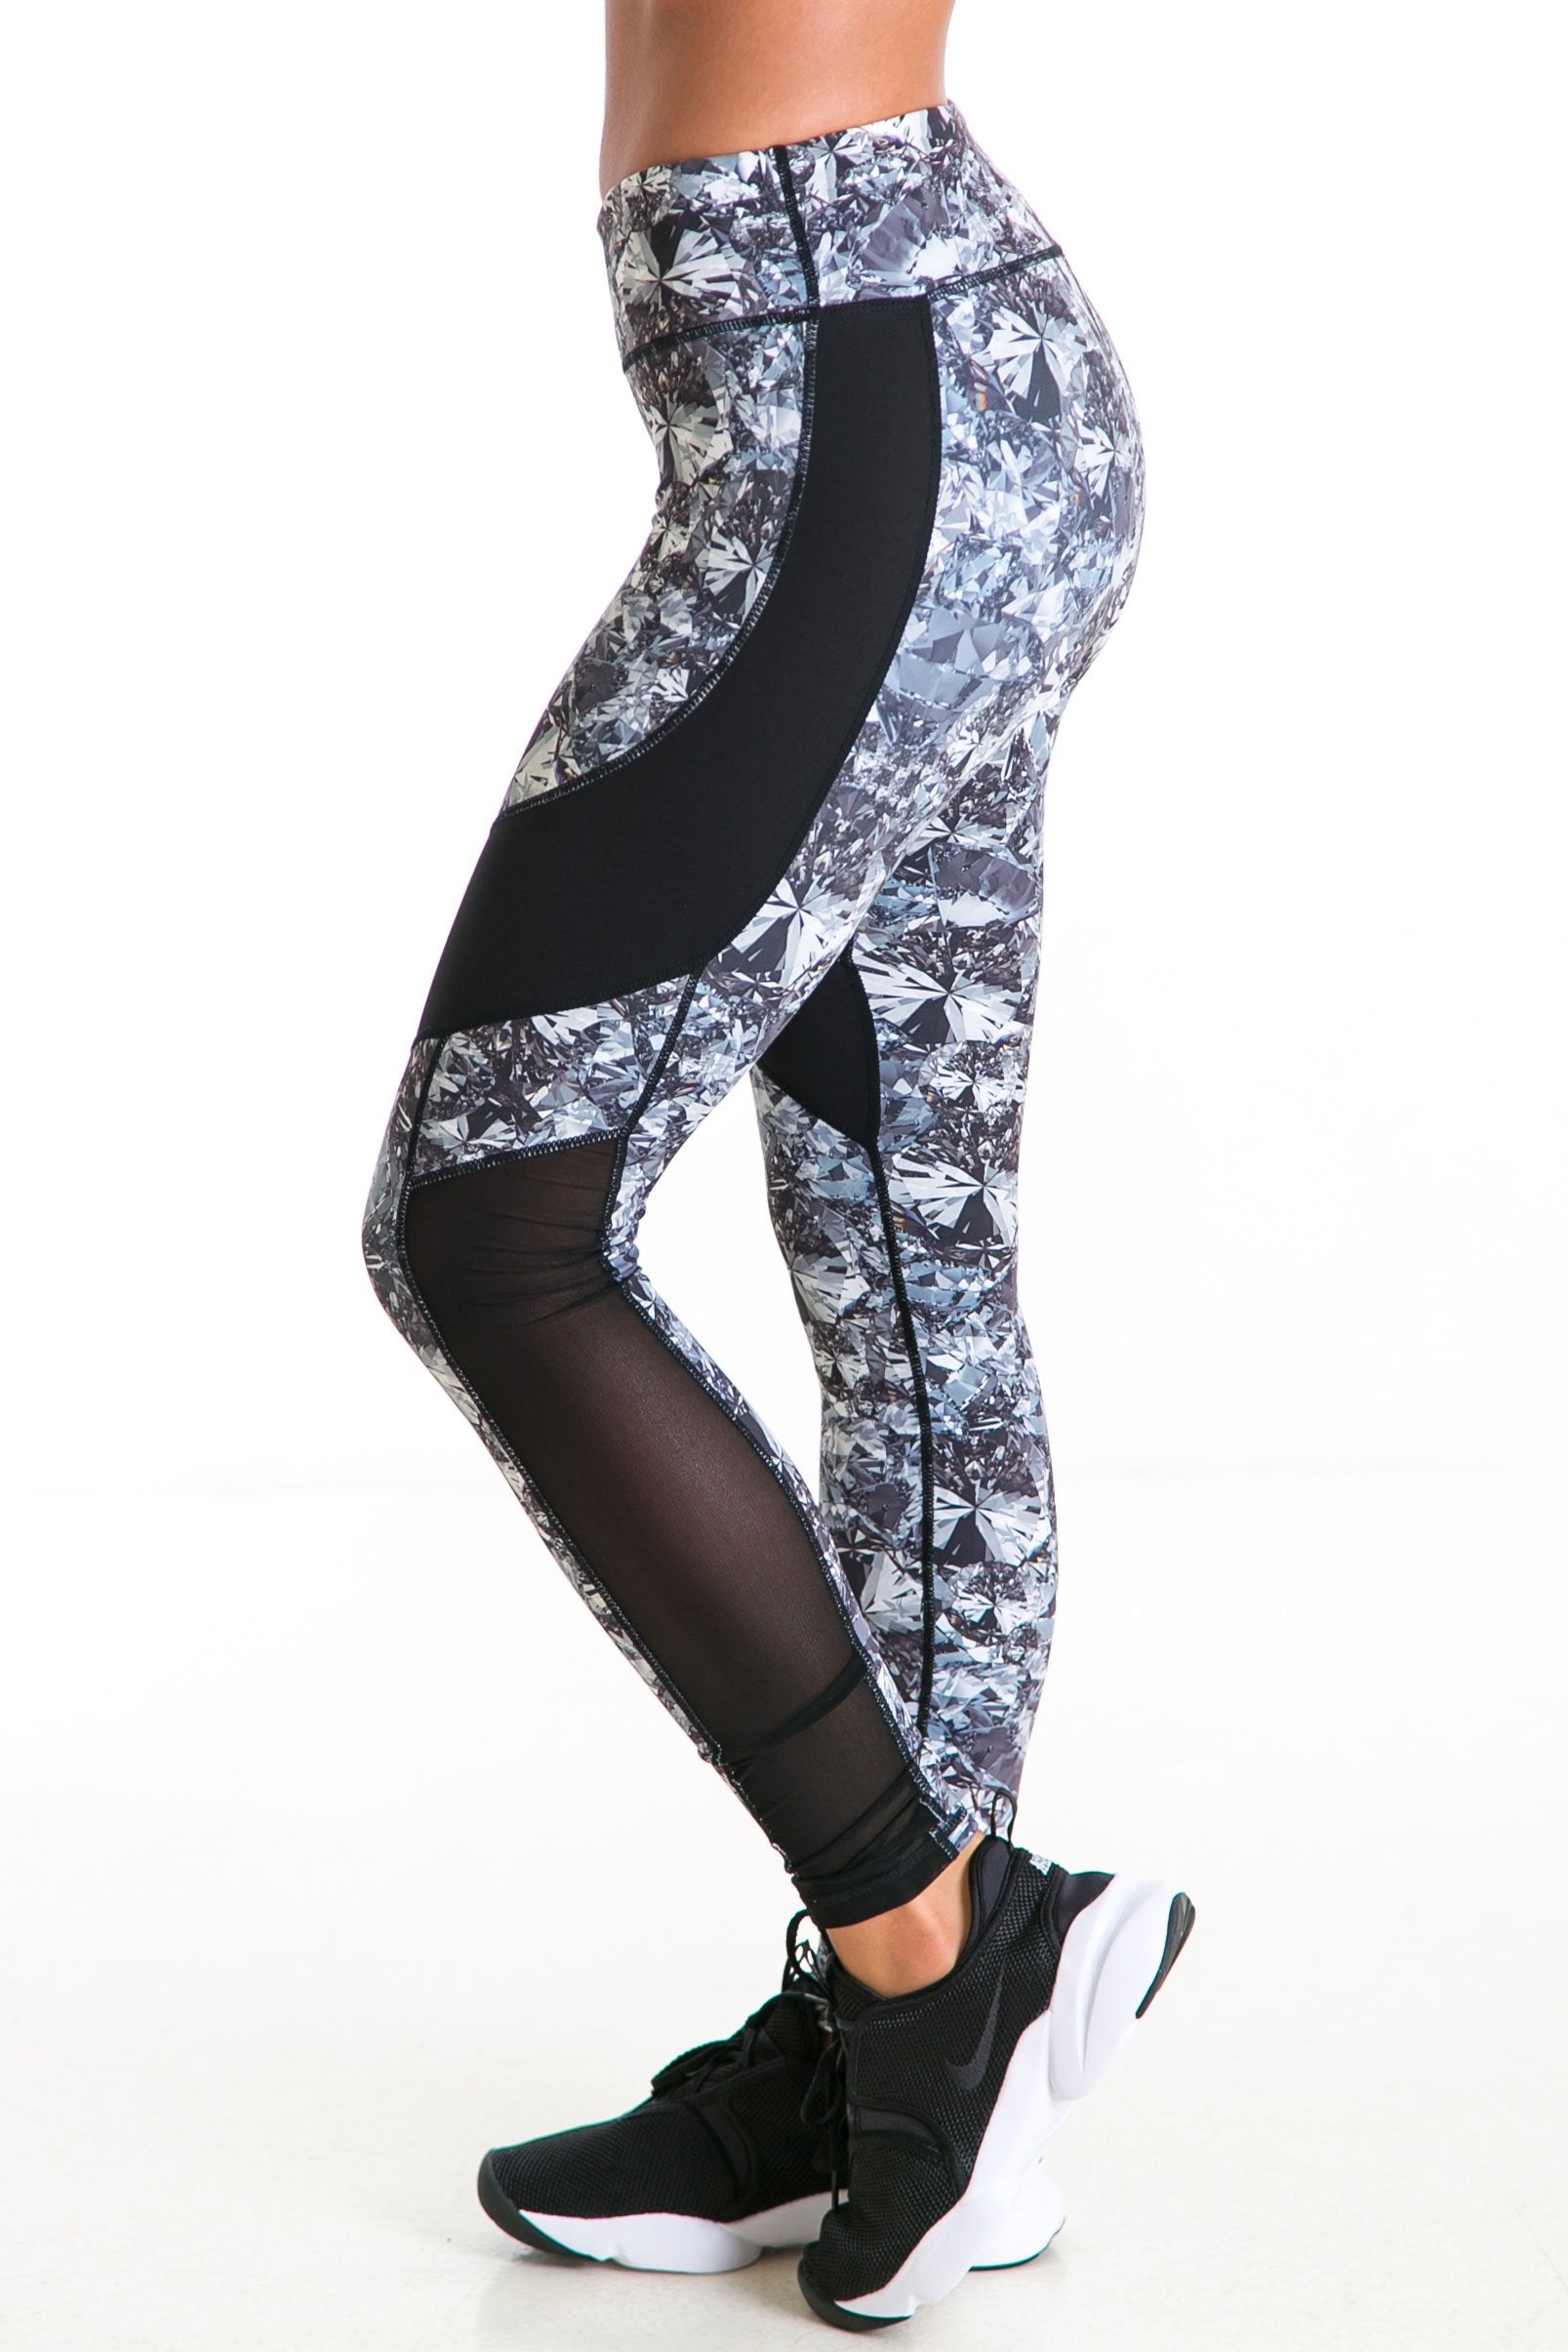 Alexa Midnight Diamond Gym Leggings– Xahara Activewear